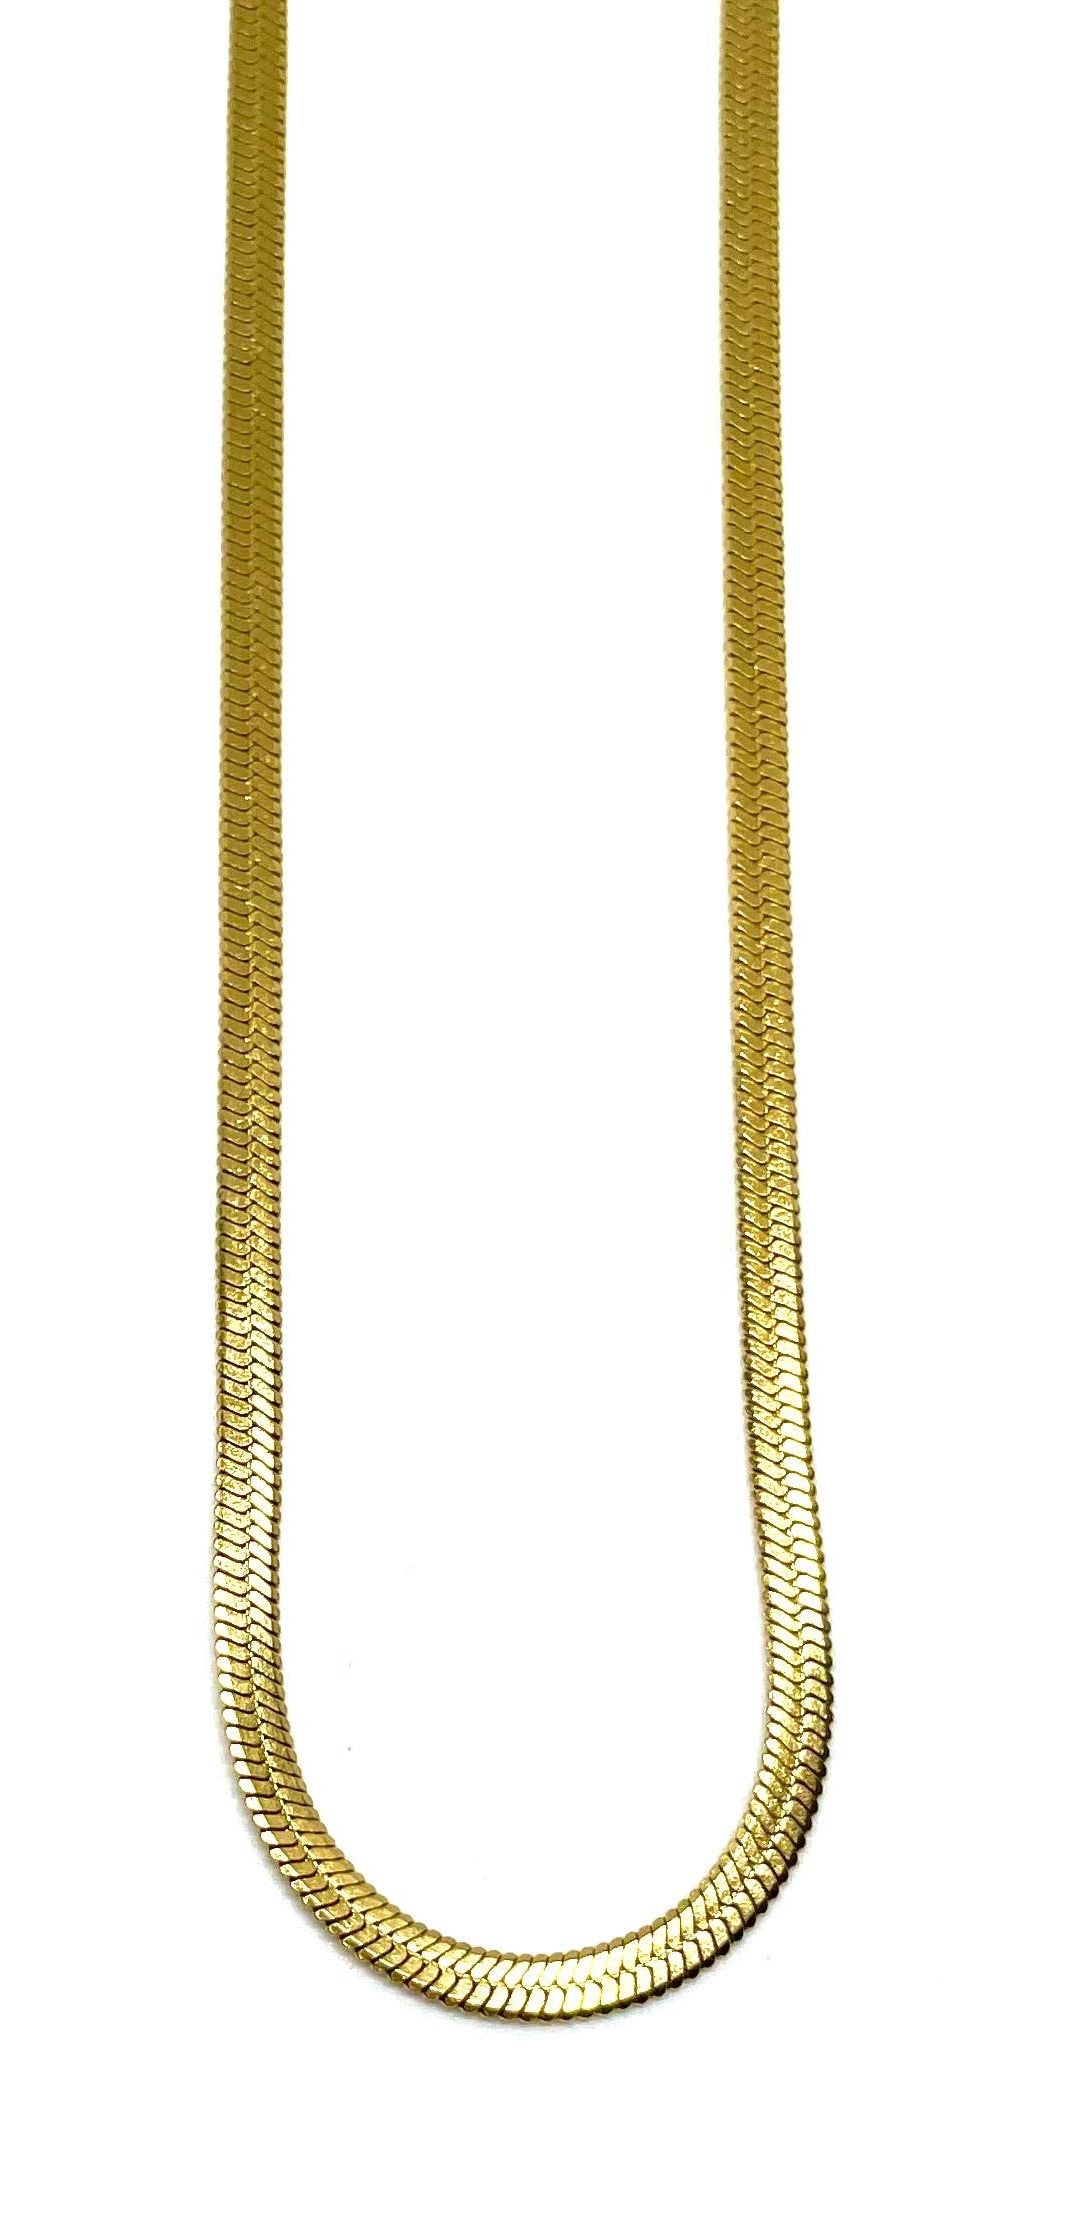 Gold Herringbone Necklace 3MM Wide